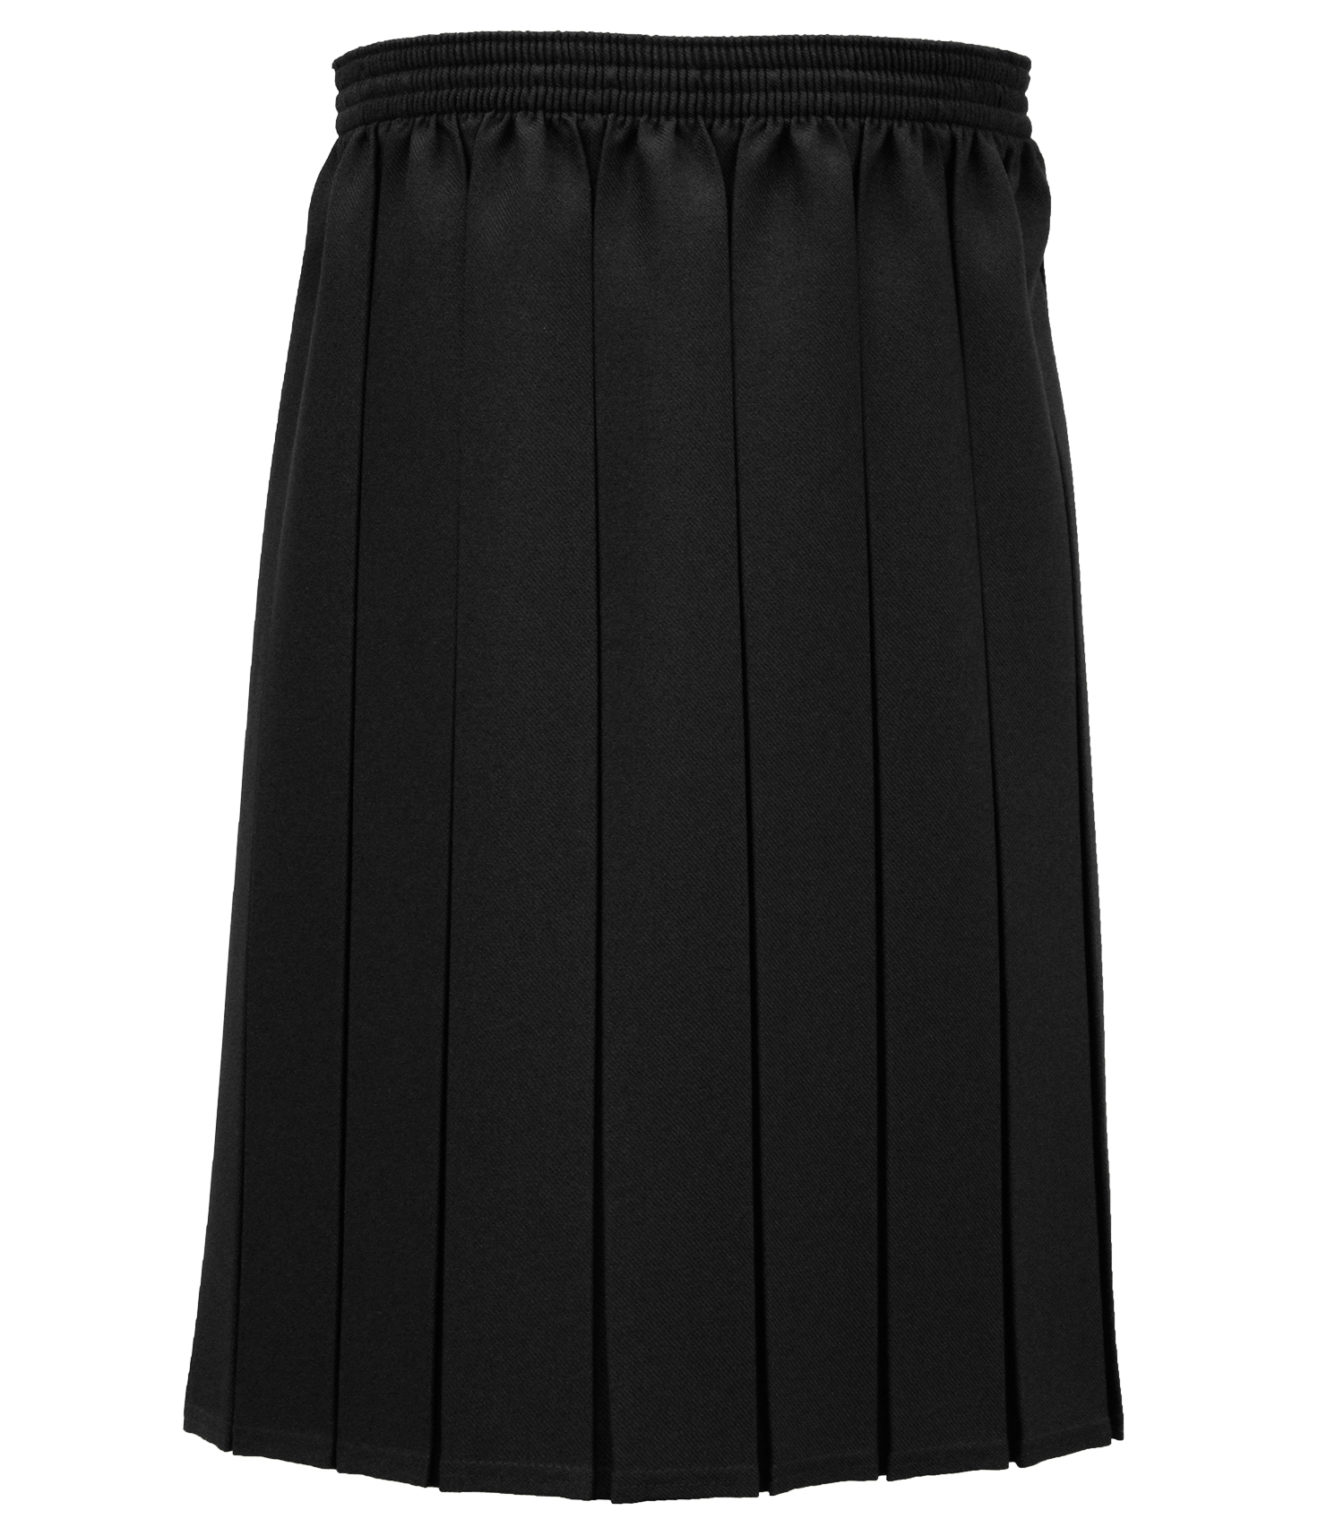 Black Pleated Skirt (201) - Quality Schoolwear